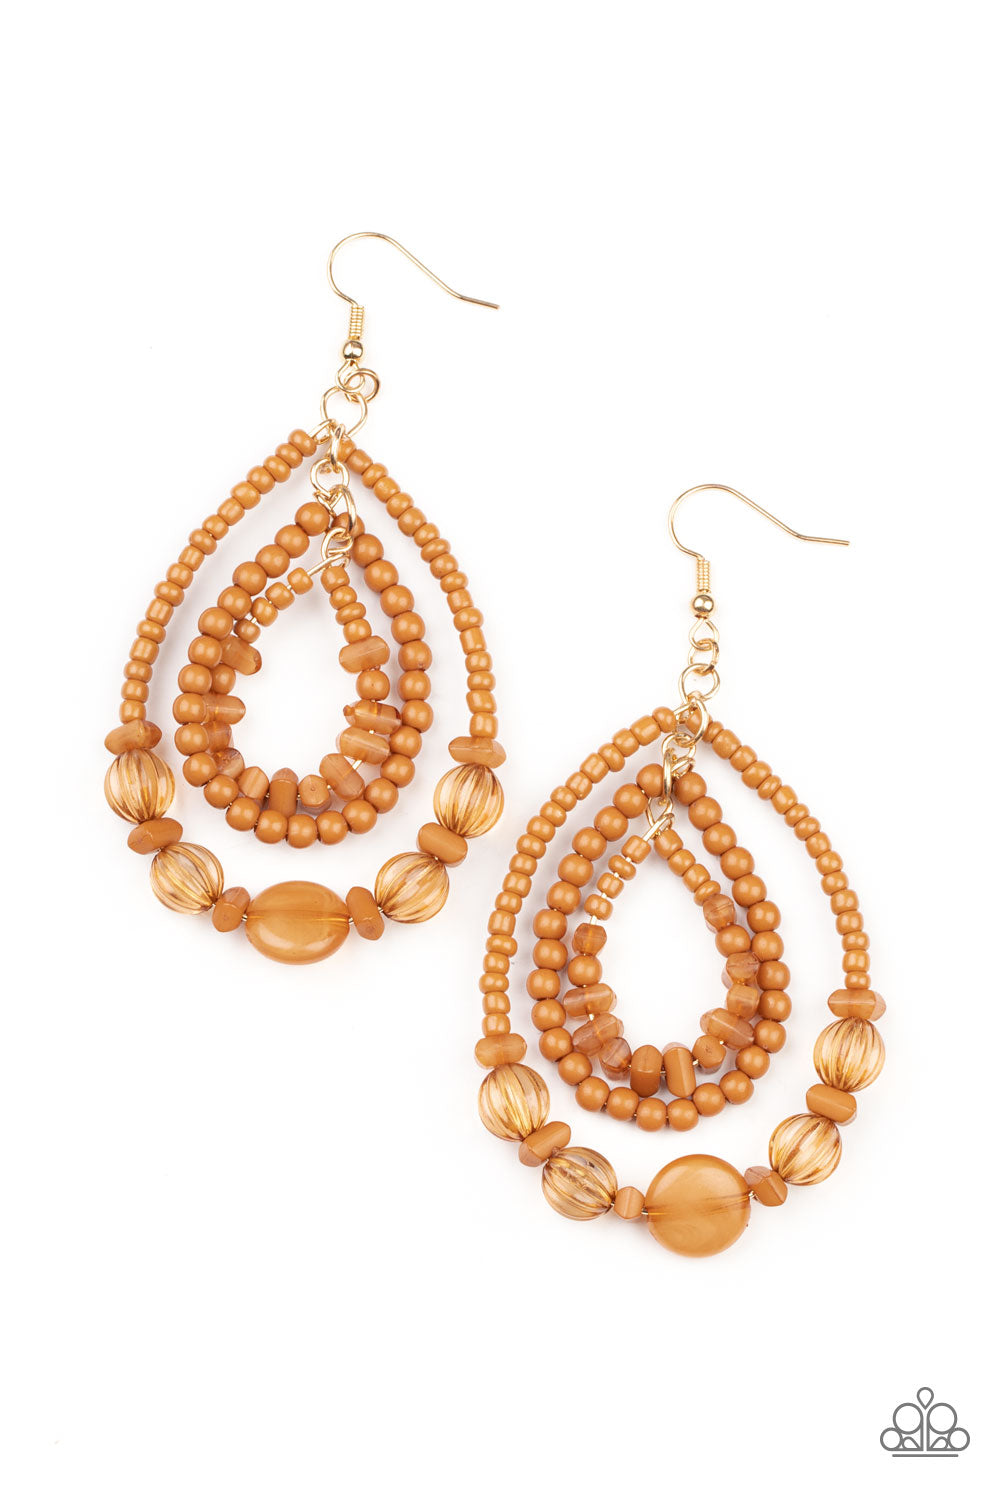 Paparazzi Prana Party Brown Earrings $5 seed beads jewelry #P5SE-BNXX-194XX Opaque stone